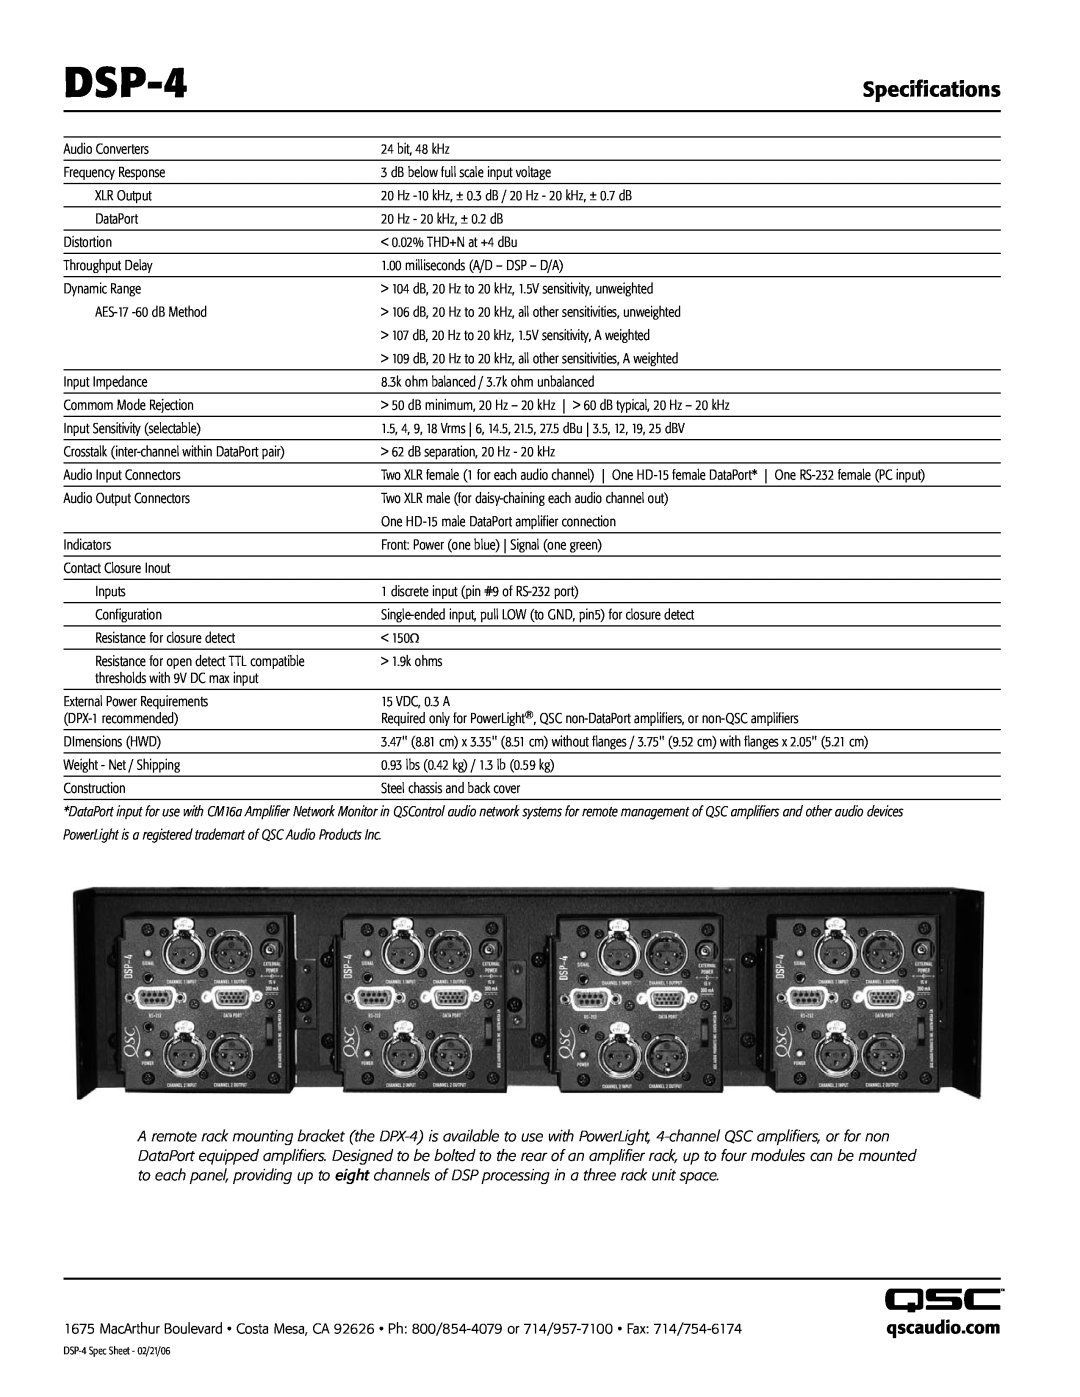 QSC Audio DSP-4 manual Specifications, qscaudio.com 